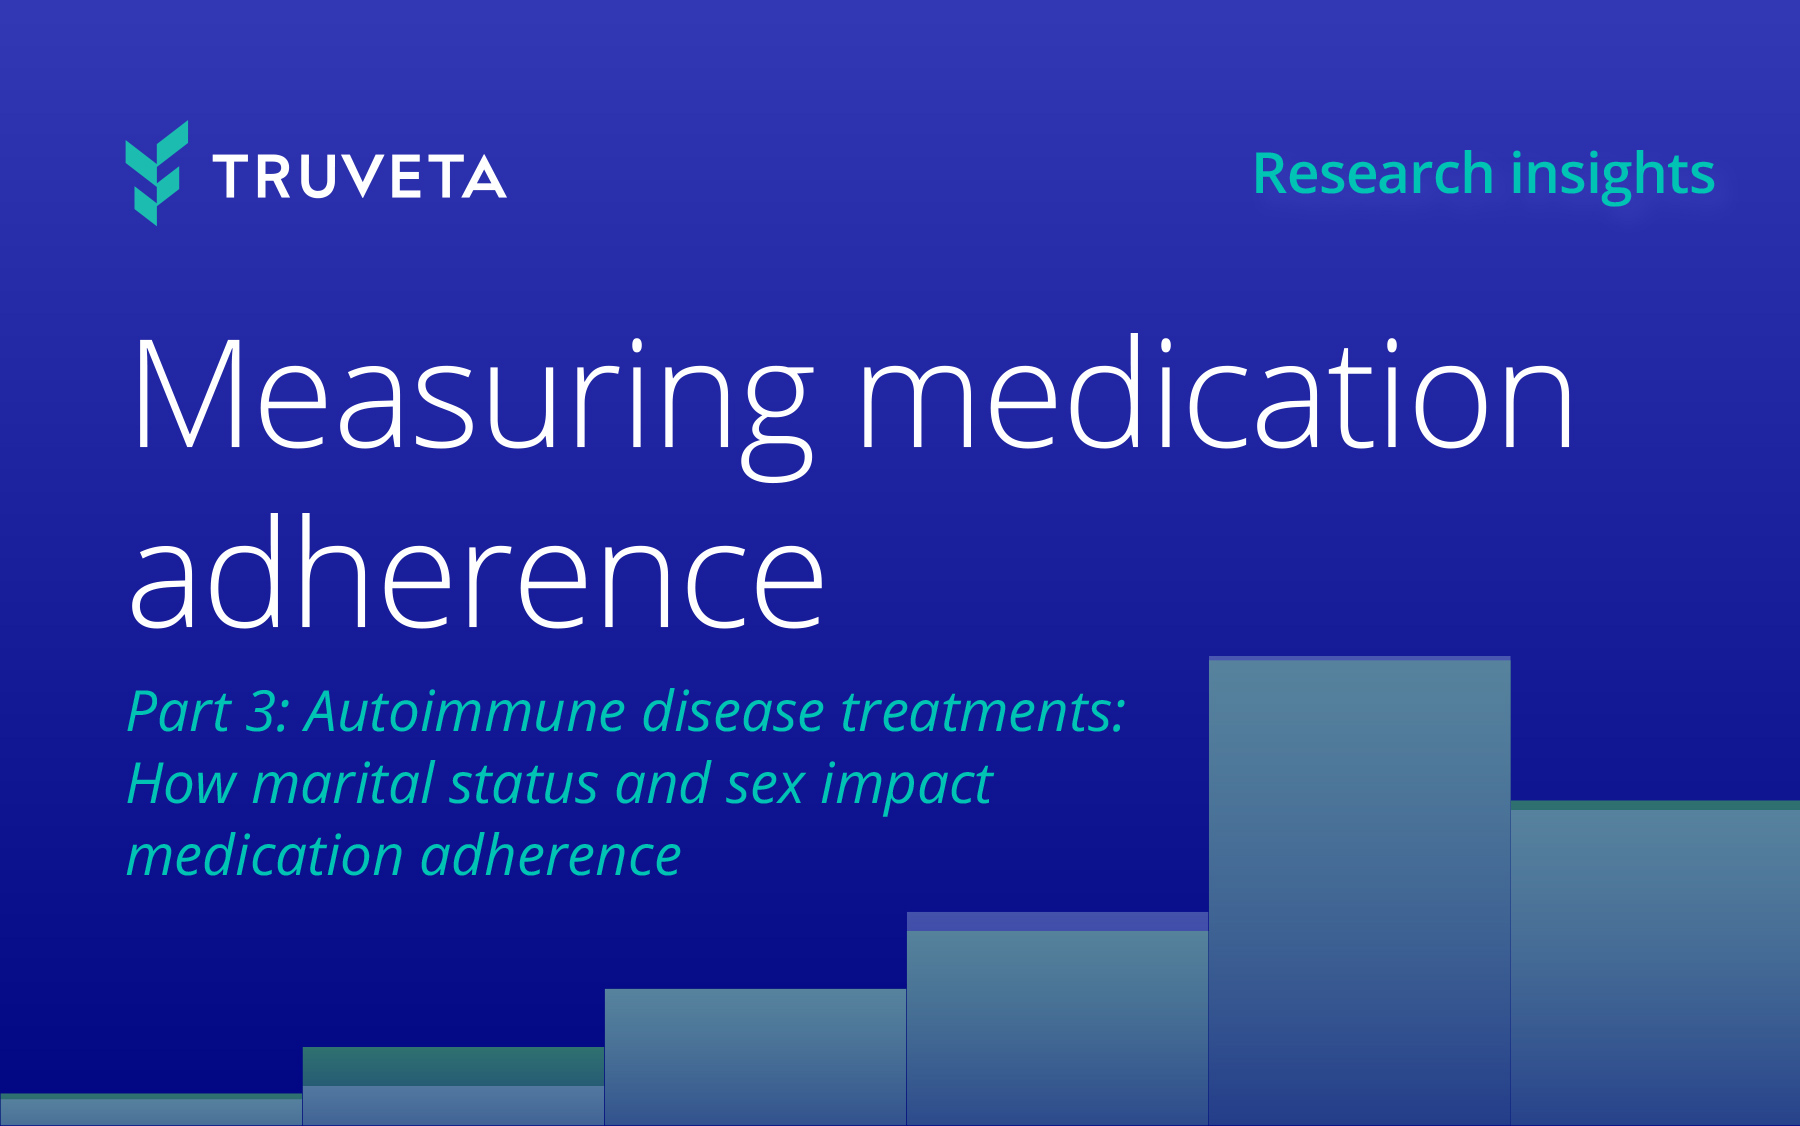 Autoimmune disease medication adherence and SDOH